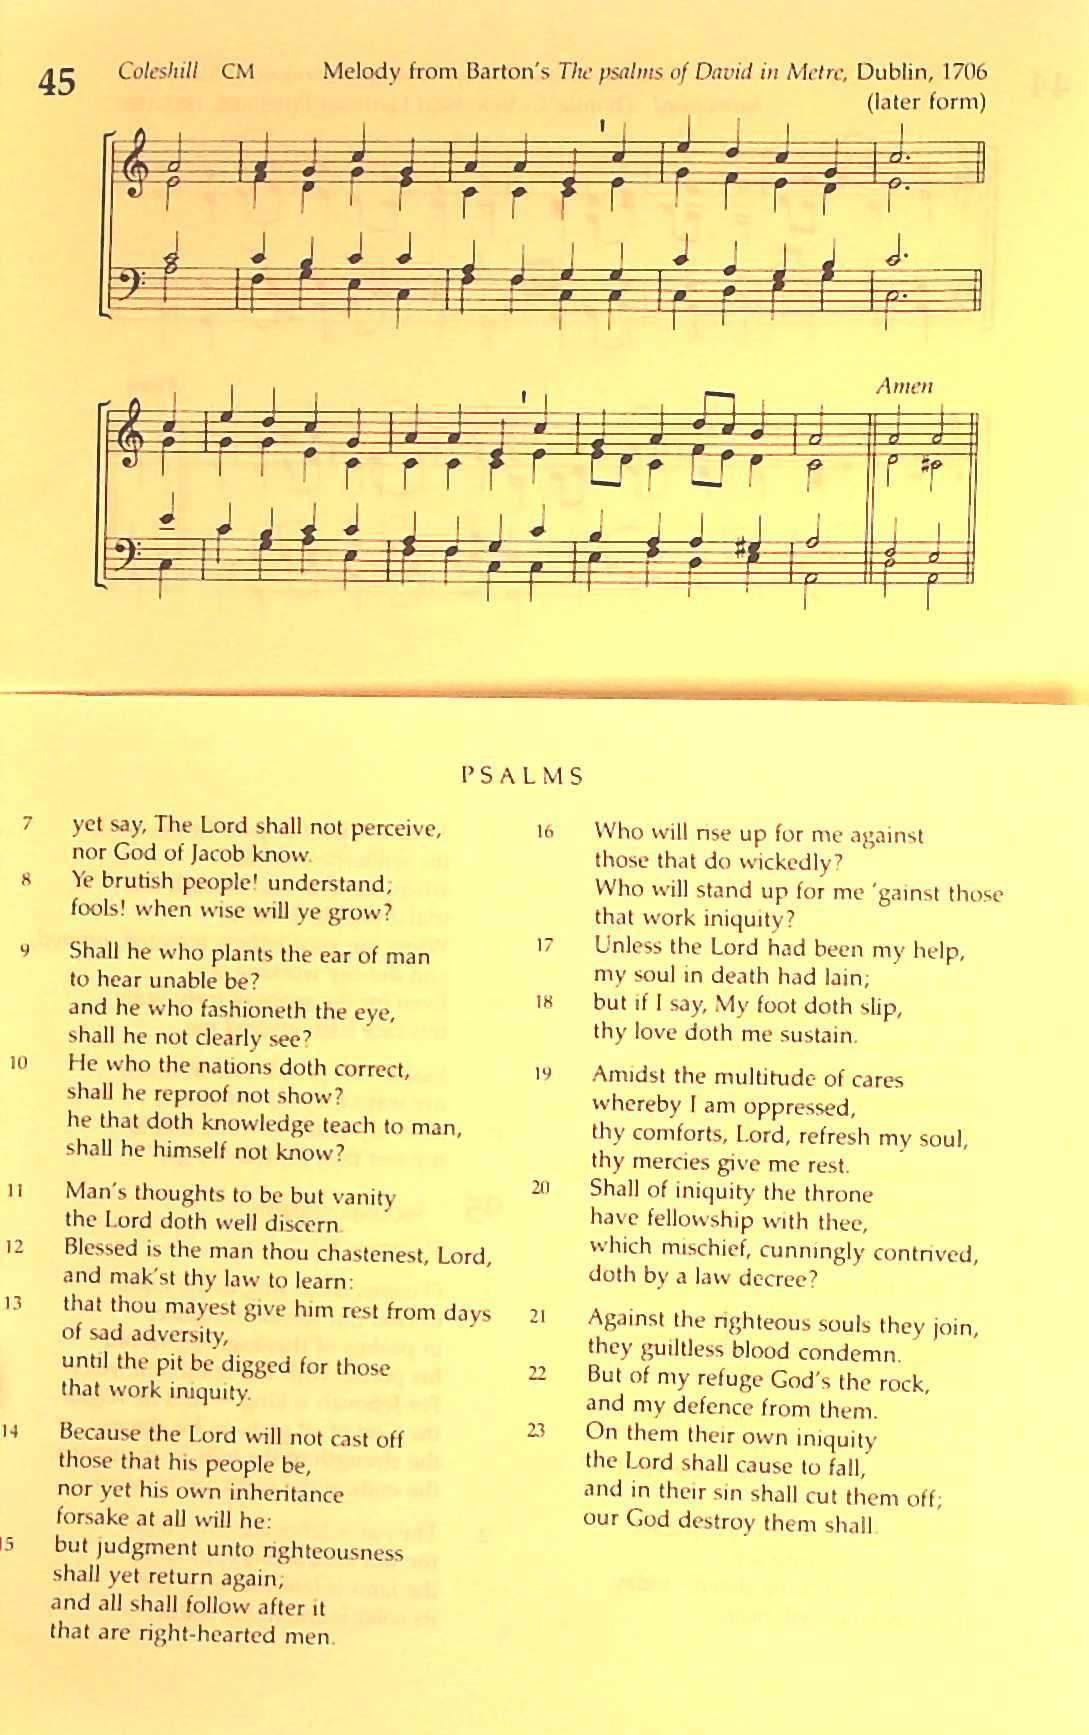 The Irish Presbyterian Hymbook page 351